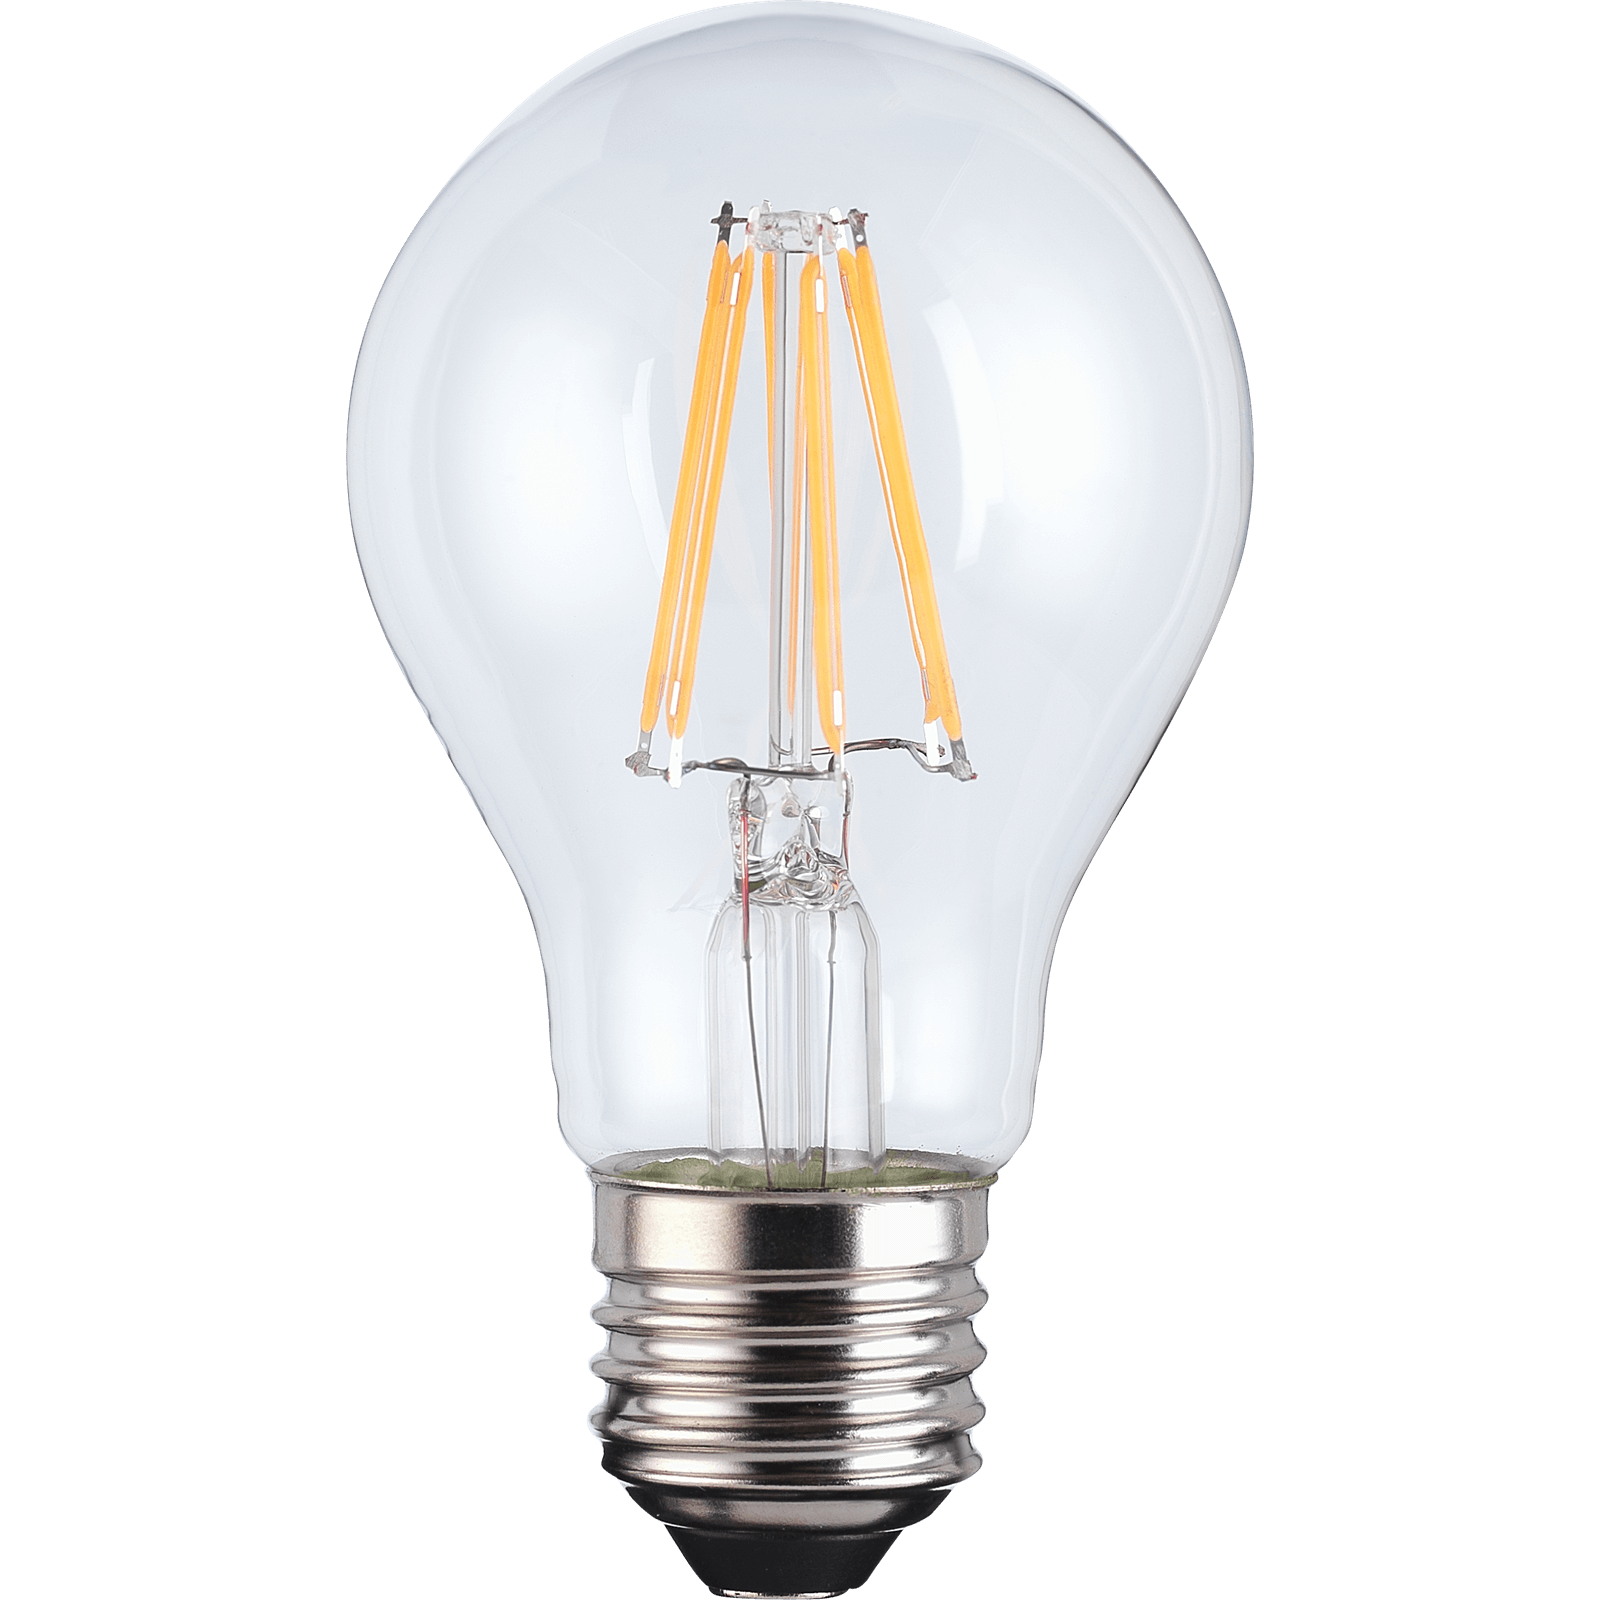 LED Filament A-lamp 6W E27 Clear Light Bulb